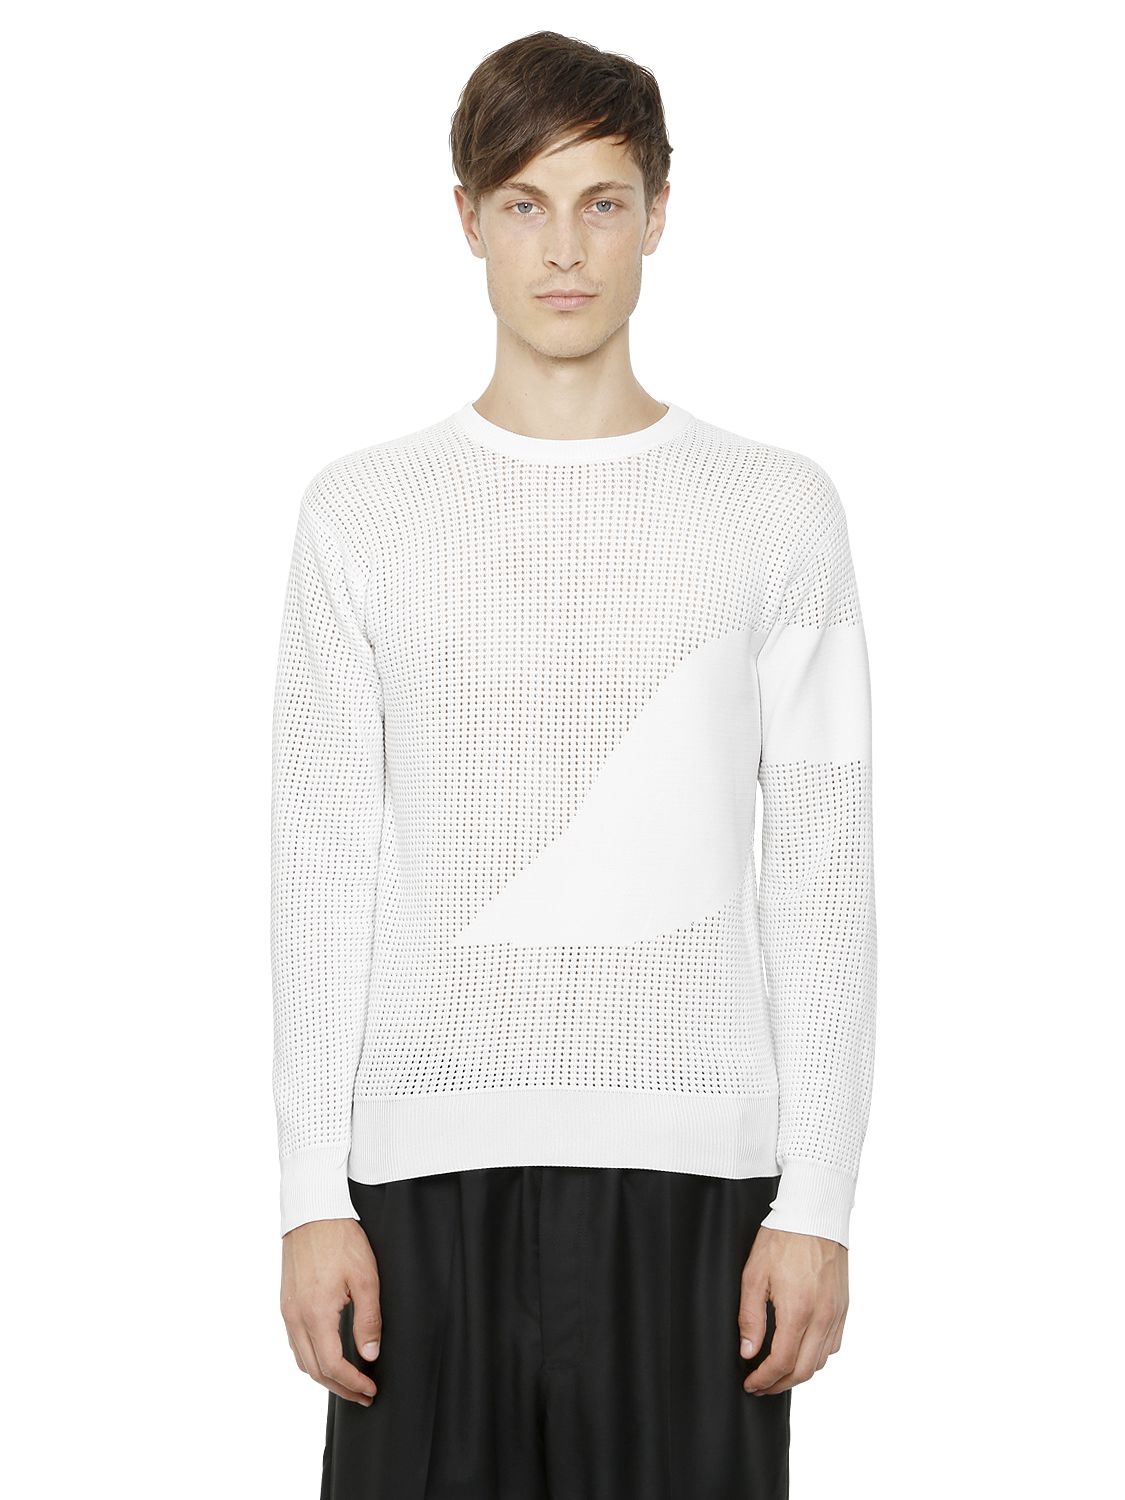 Alexander mcqueen Nylon Sweater With Insert in White for Men | Lyst